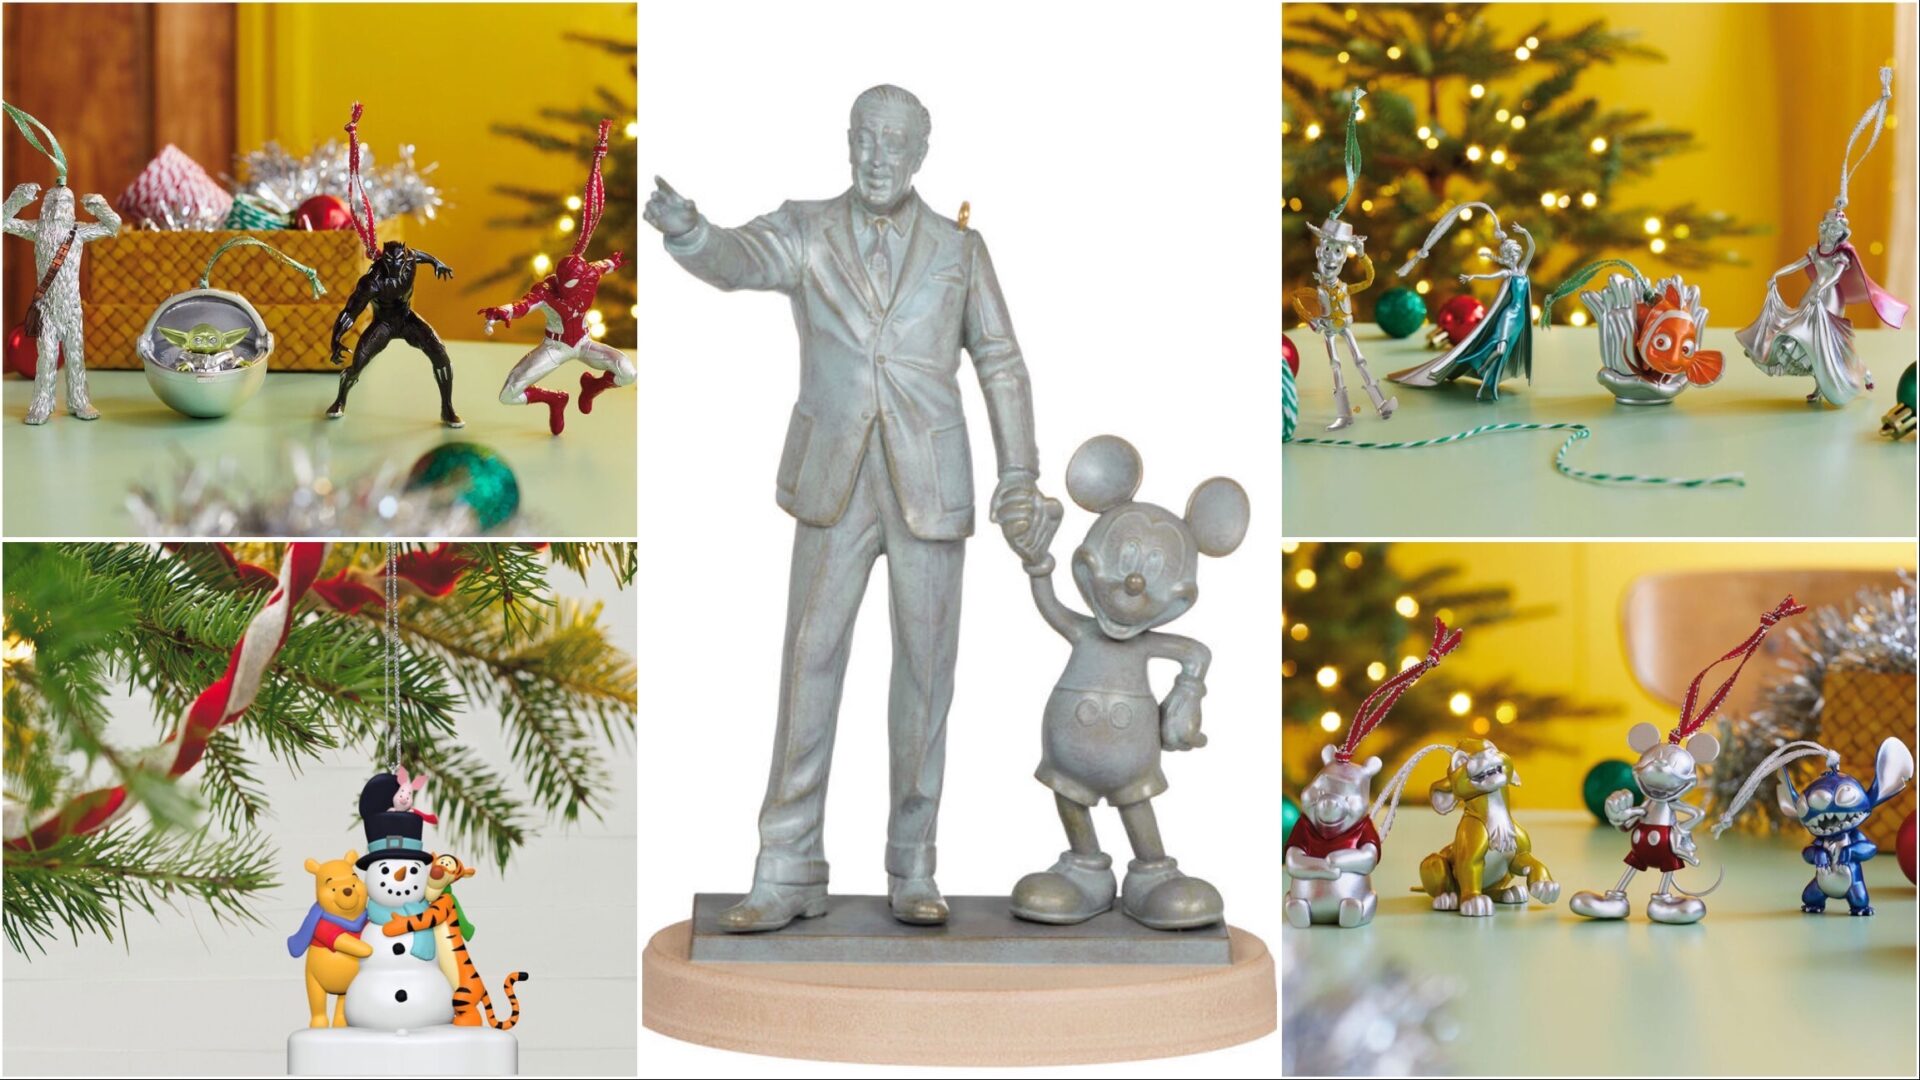 New Disney100 Hallmark Ornaments Coming Soon!